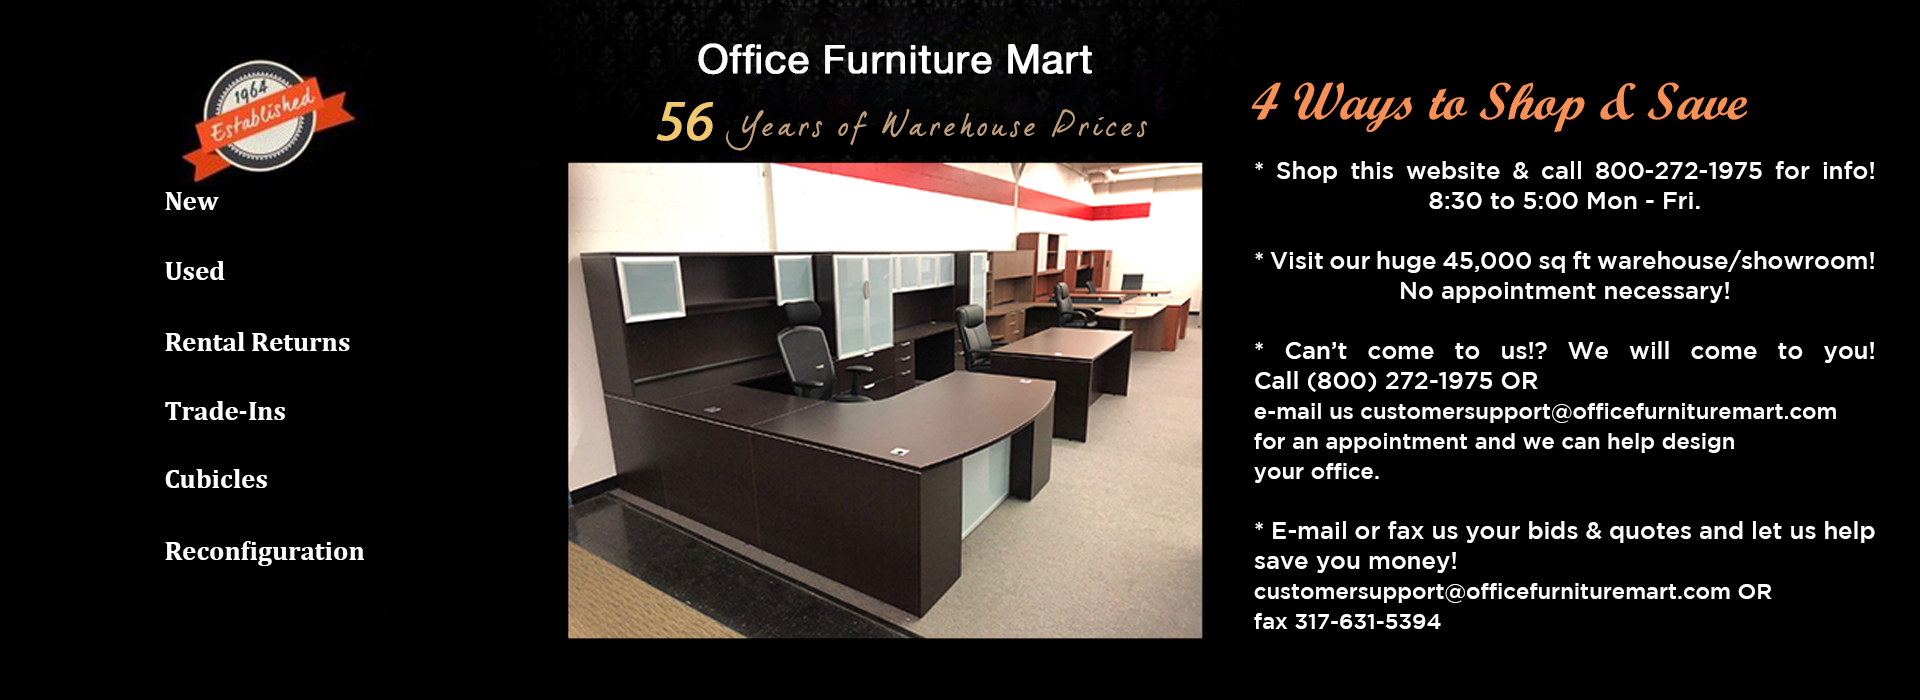 Office Furniture - Mishawaka Furniture Corp.